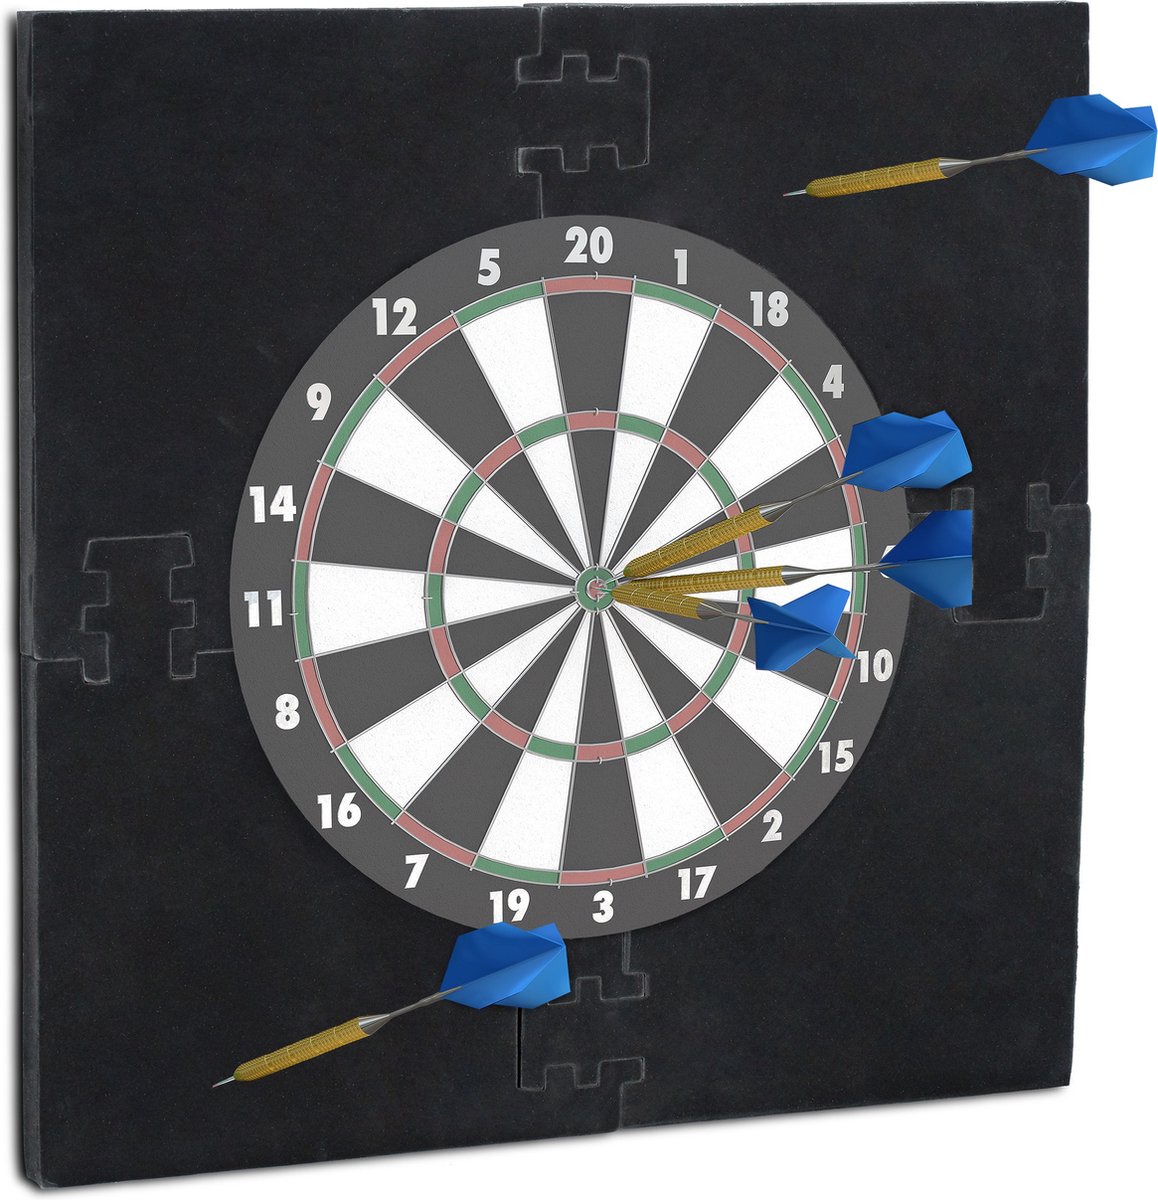 Relaxdays dartbord surround ring - beschermrand - beschermring - ring voor dartbord - 45cm - zwart